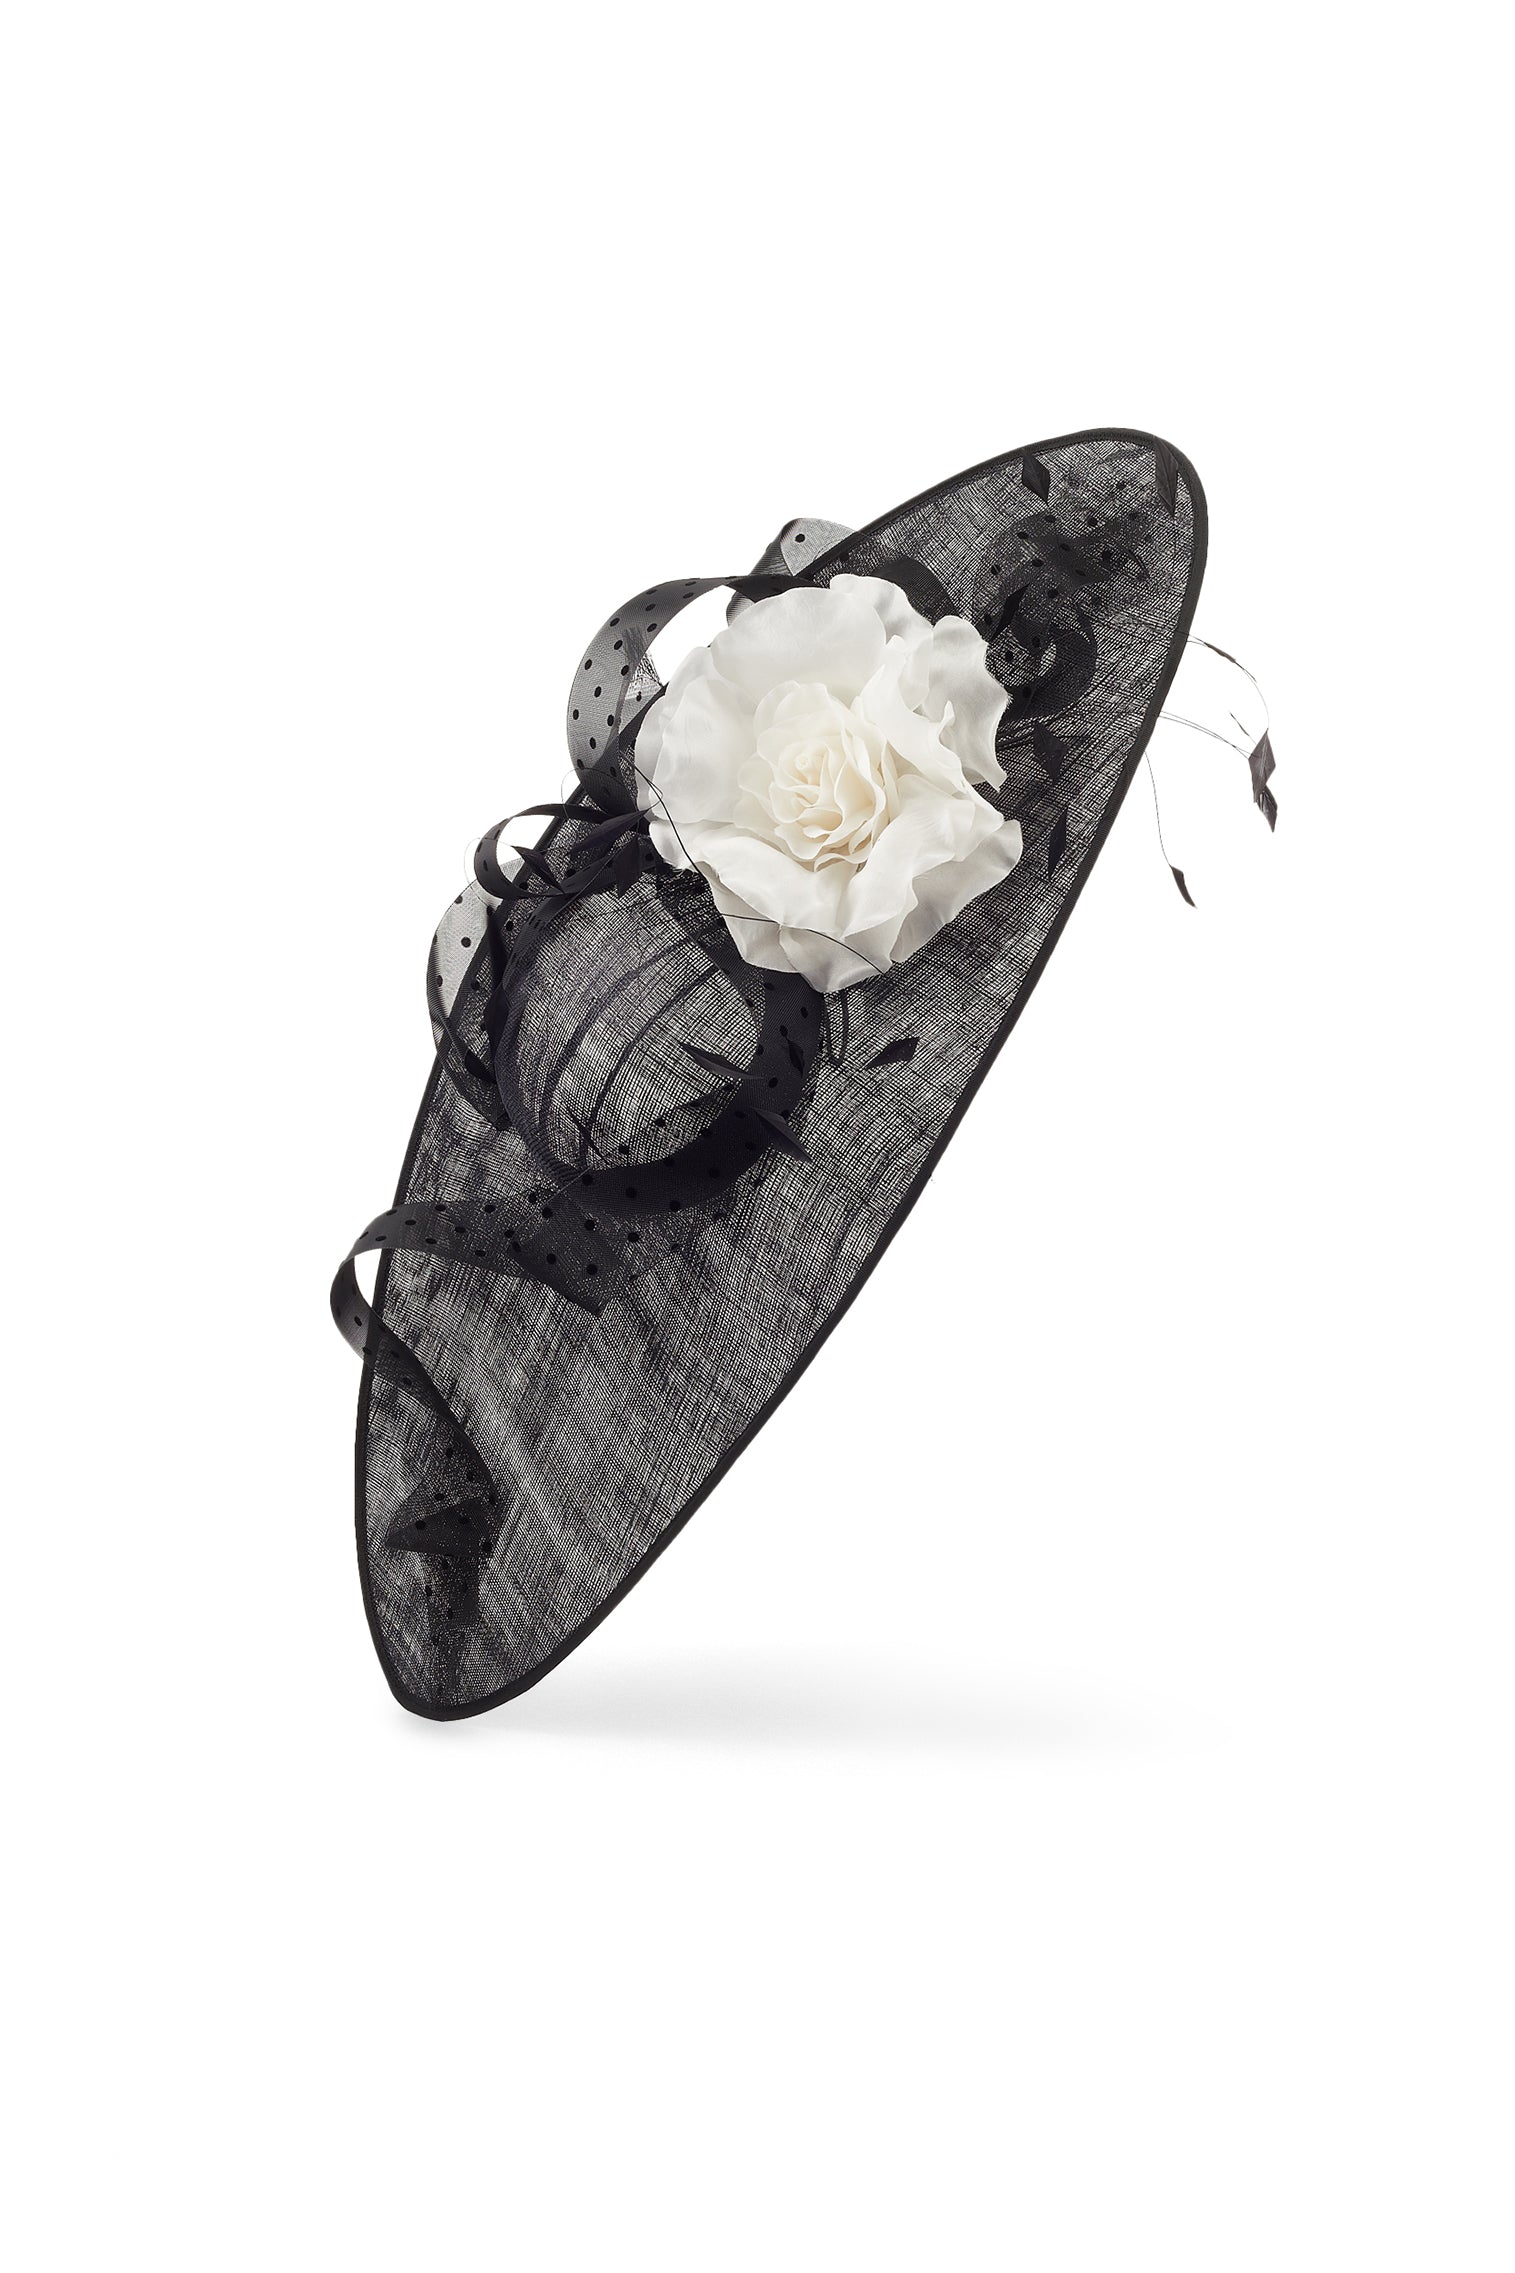 Vanilla Black Slice Hat - Black Hats & Headpieces for Women - Lock & Co. Hatters London UK